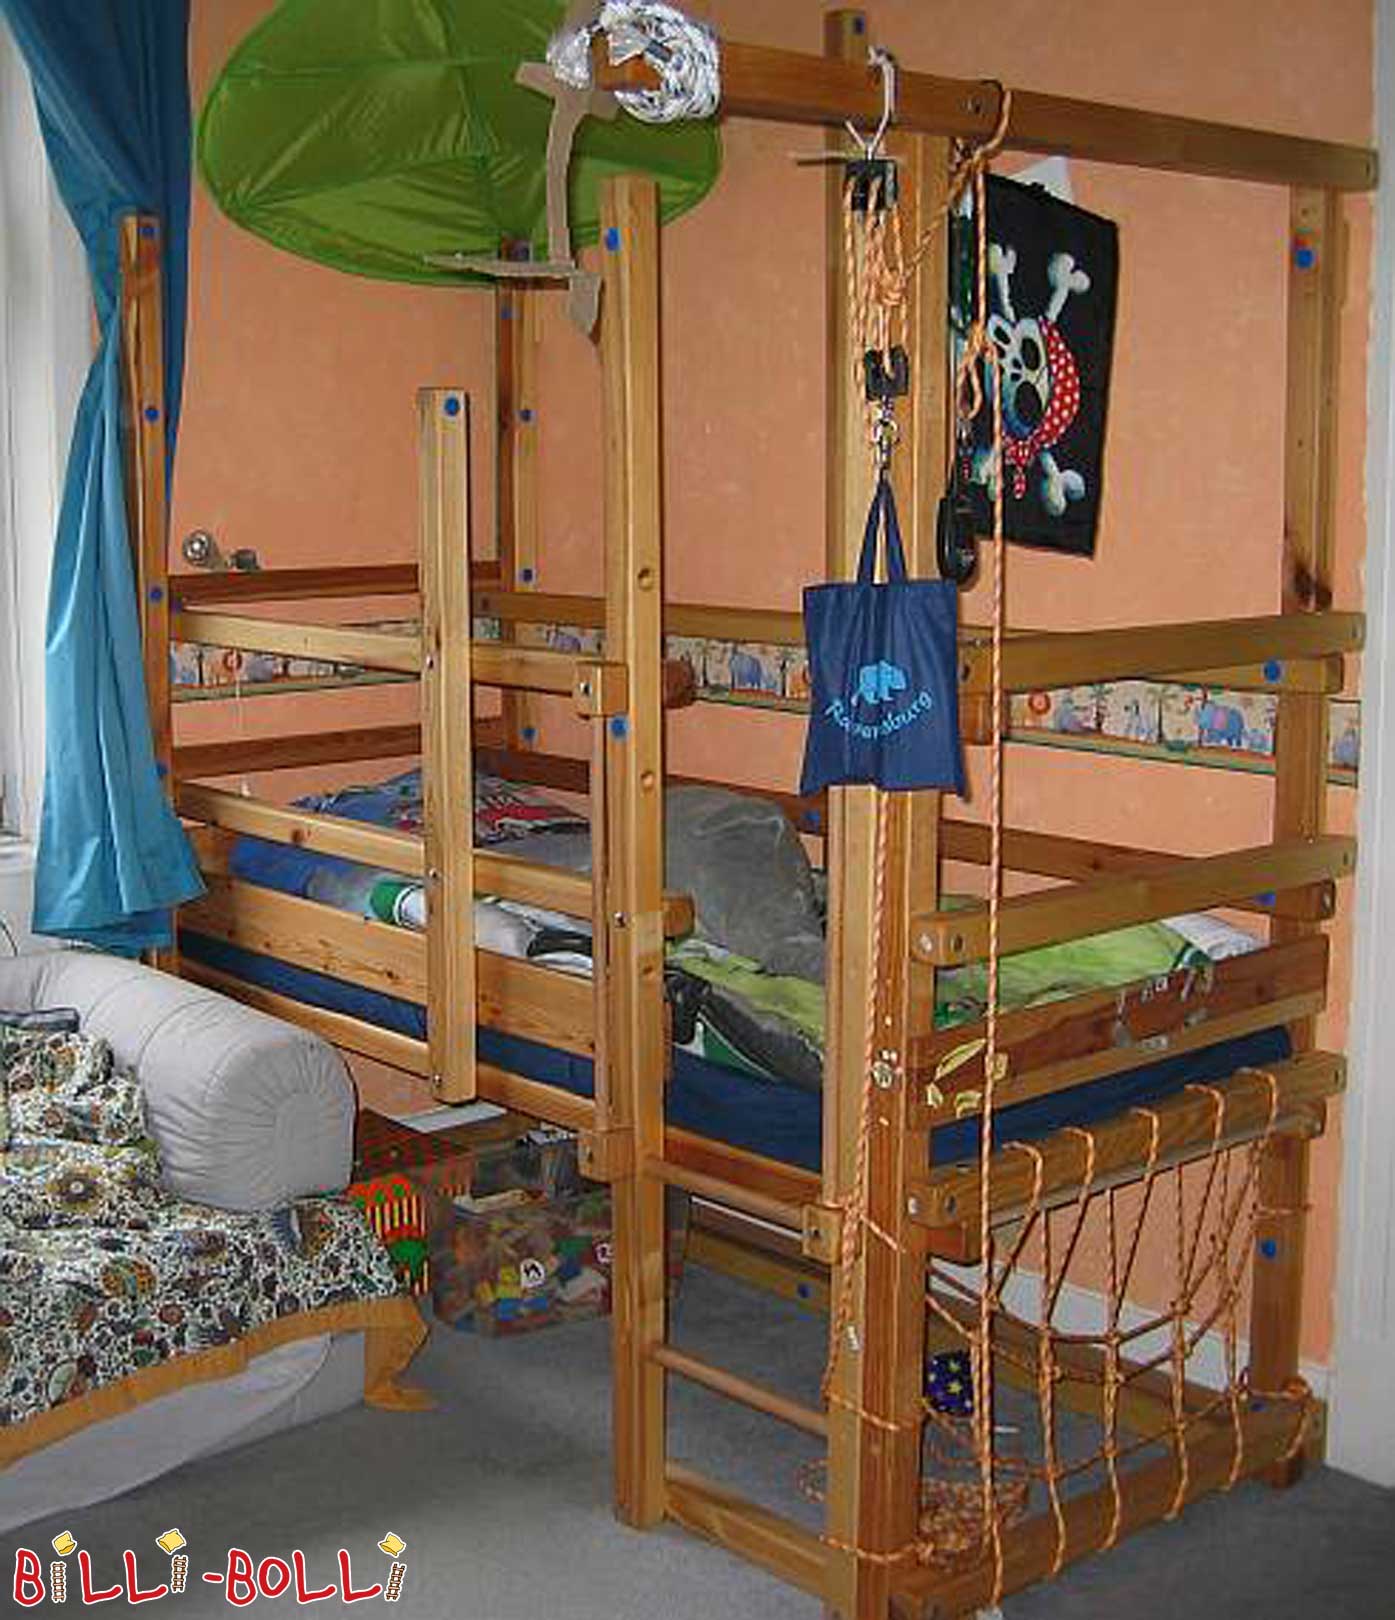 Billi-Bolli growing loft bed (Category: second hand loft bed)